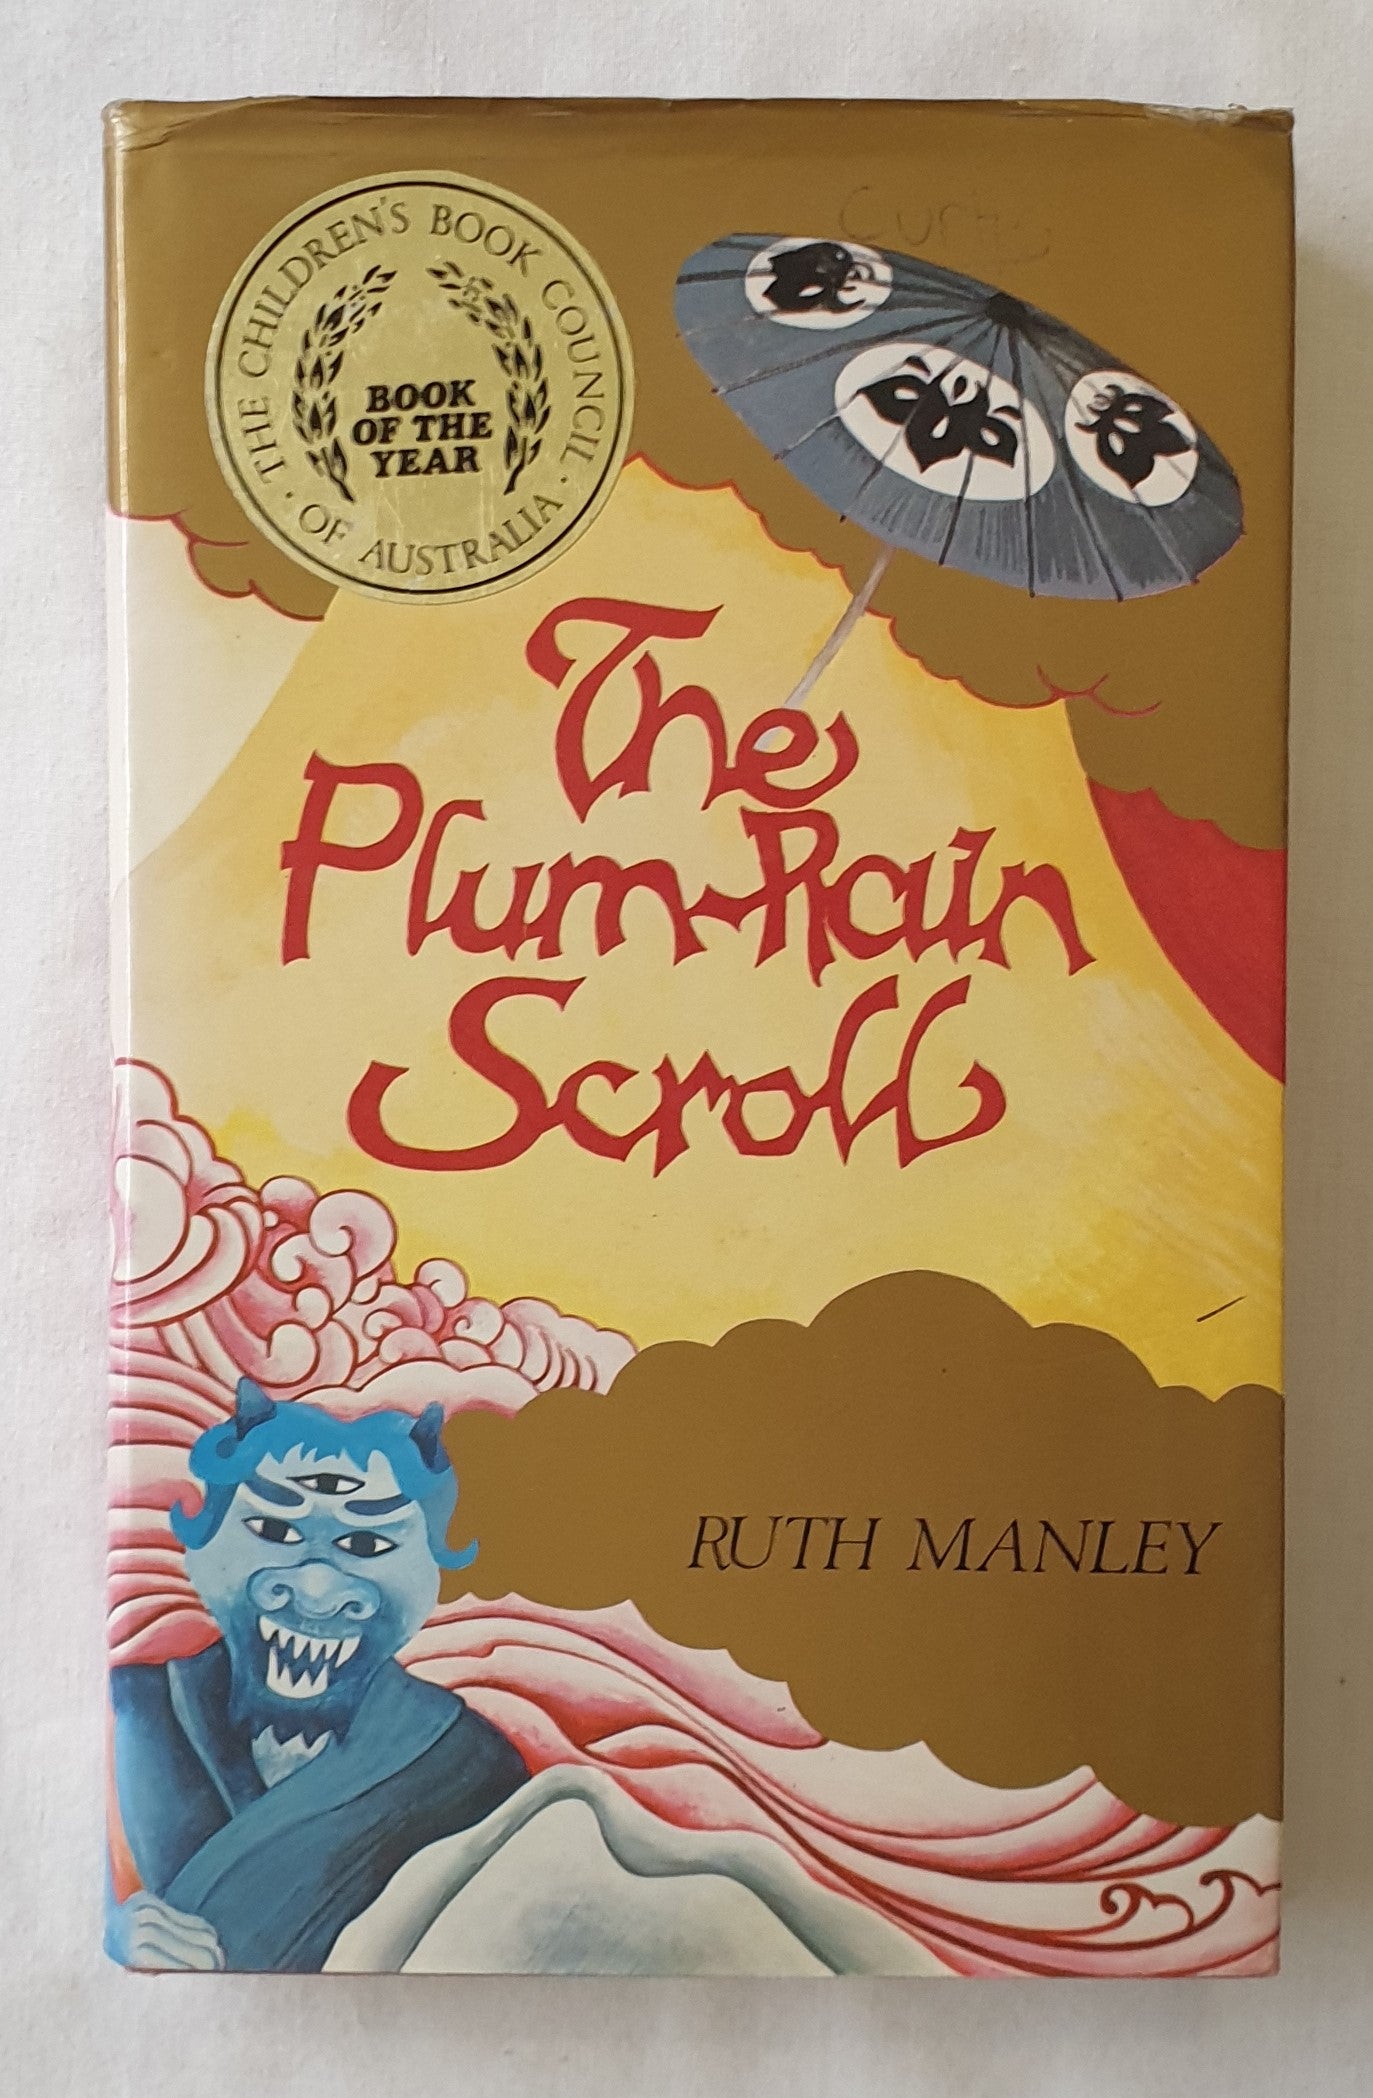 The Plum-Rain Scroll by Ruth Manley